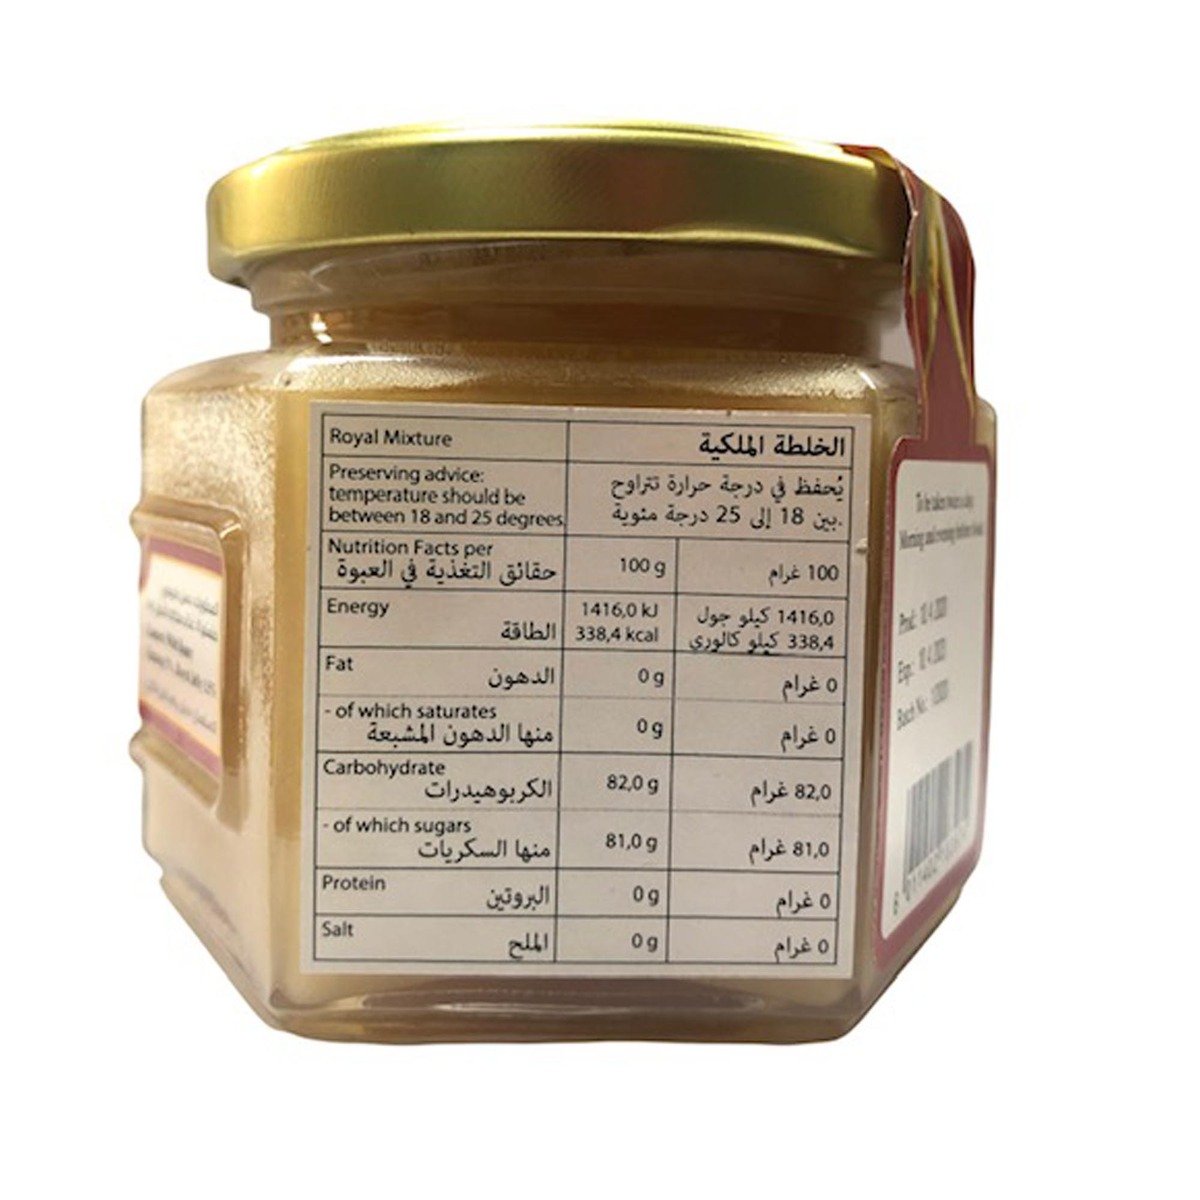 Y.H.H Royal Mixture Honey 250 g